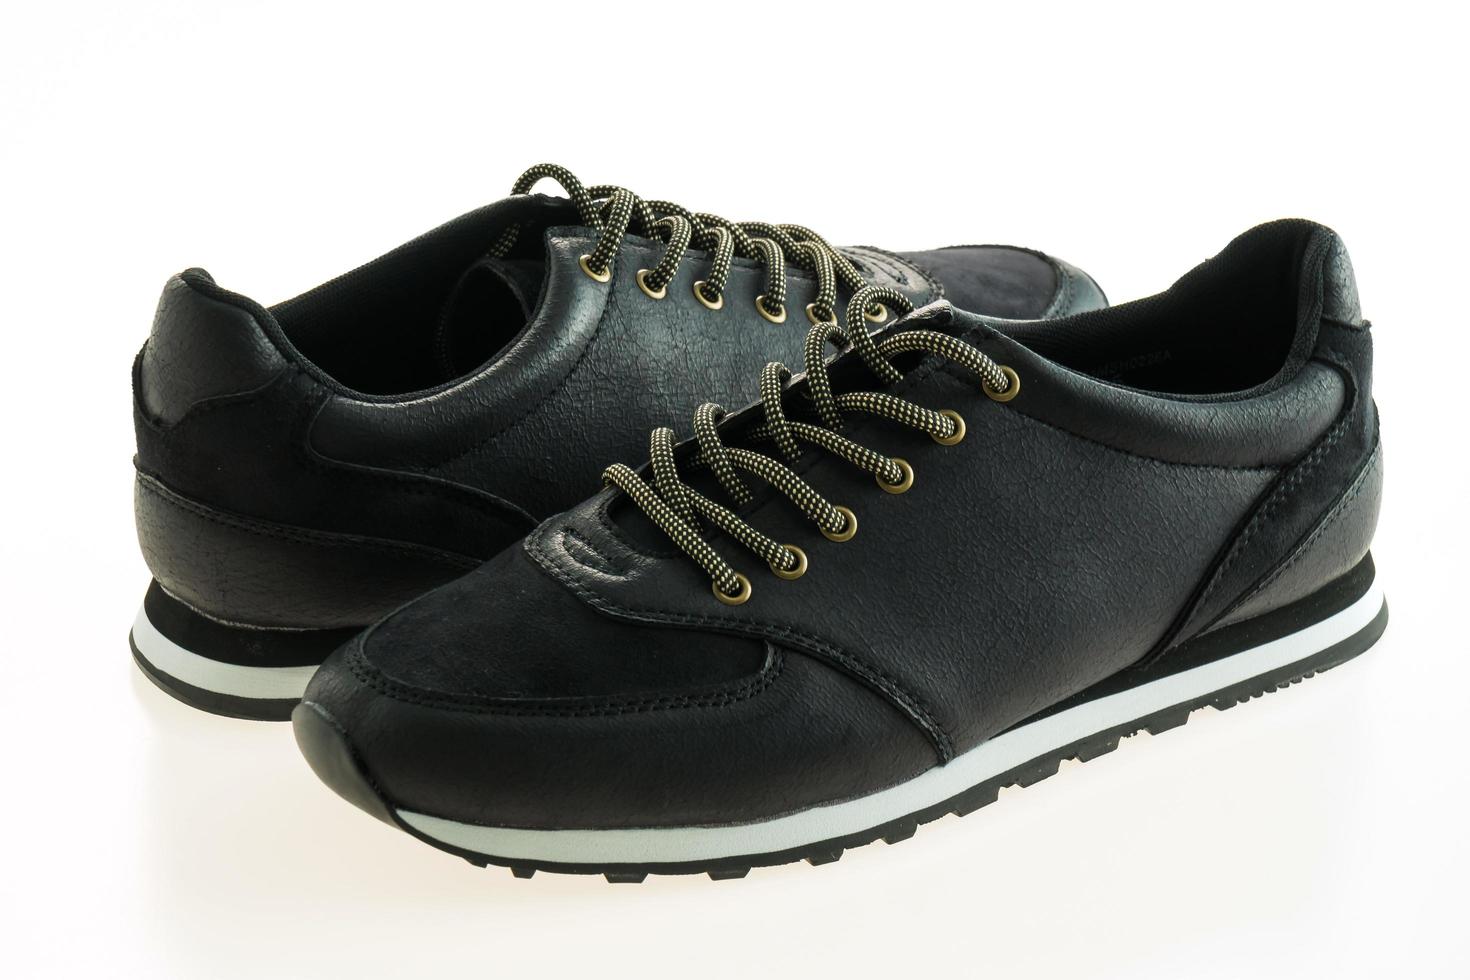 Beautiful black leather shoes photo